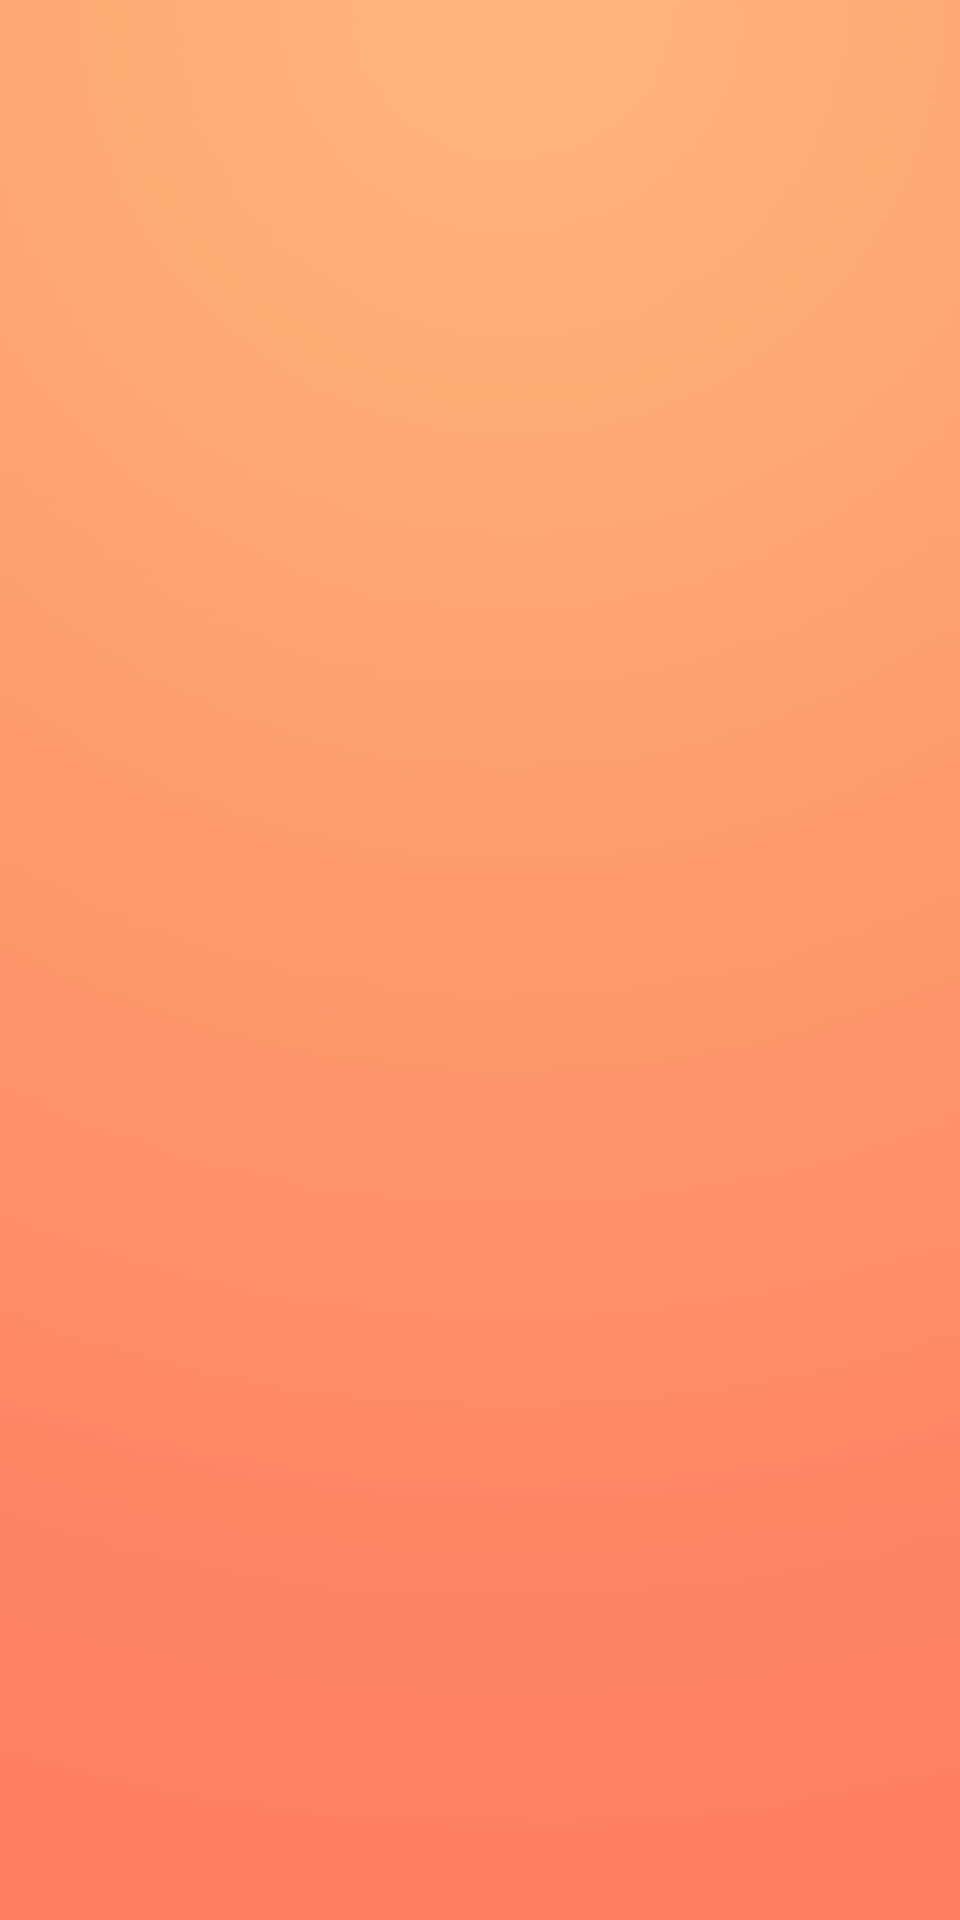 Vibrant Bright Orange Ombre Gradient